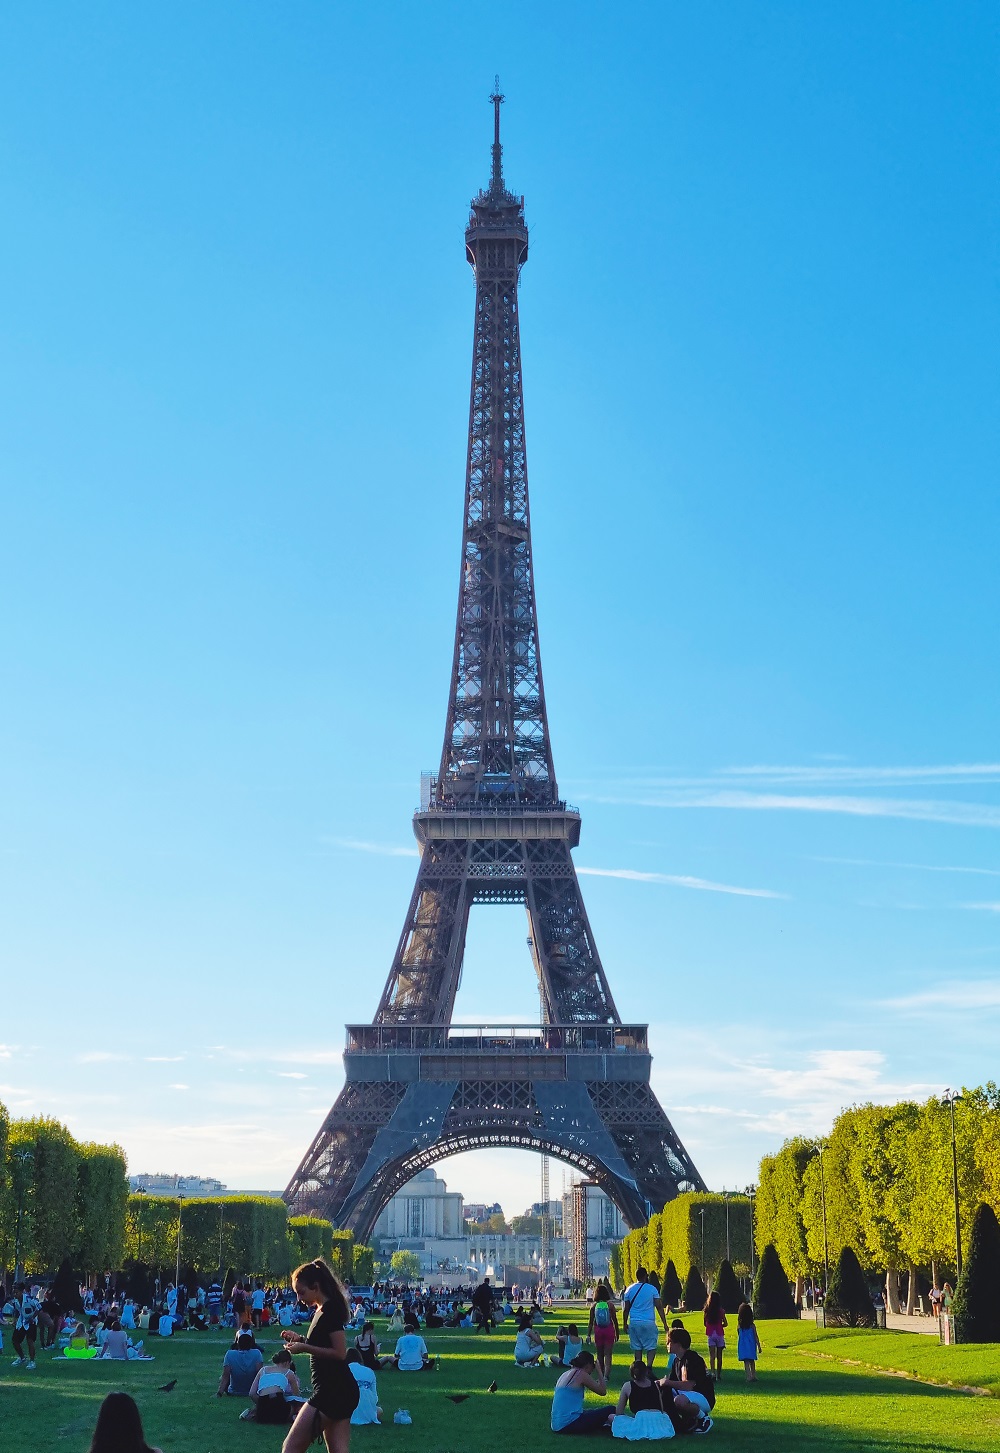 The Eiffel Tower